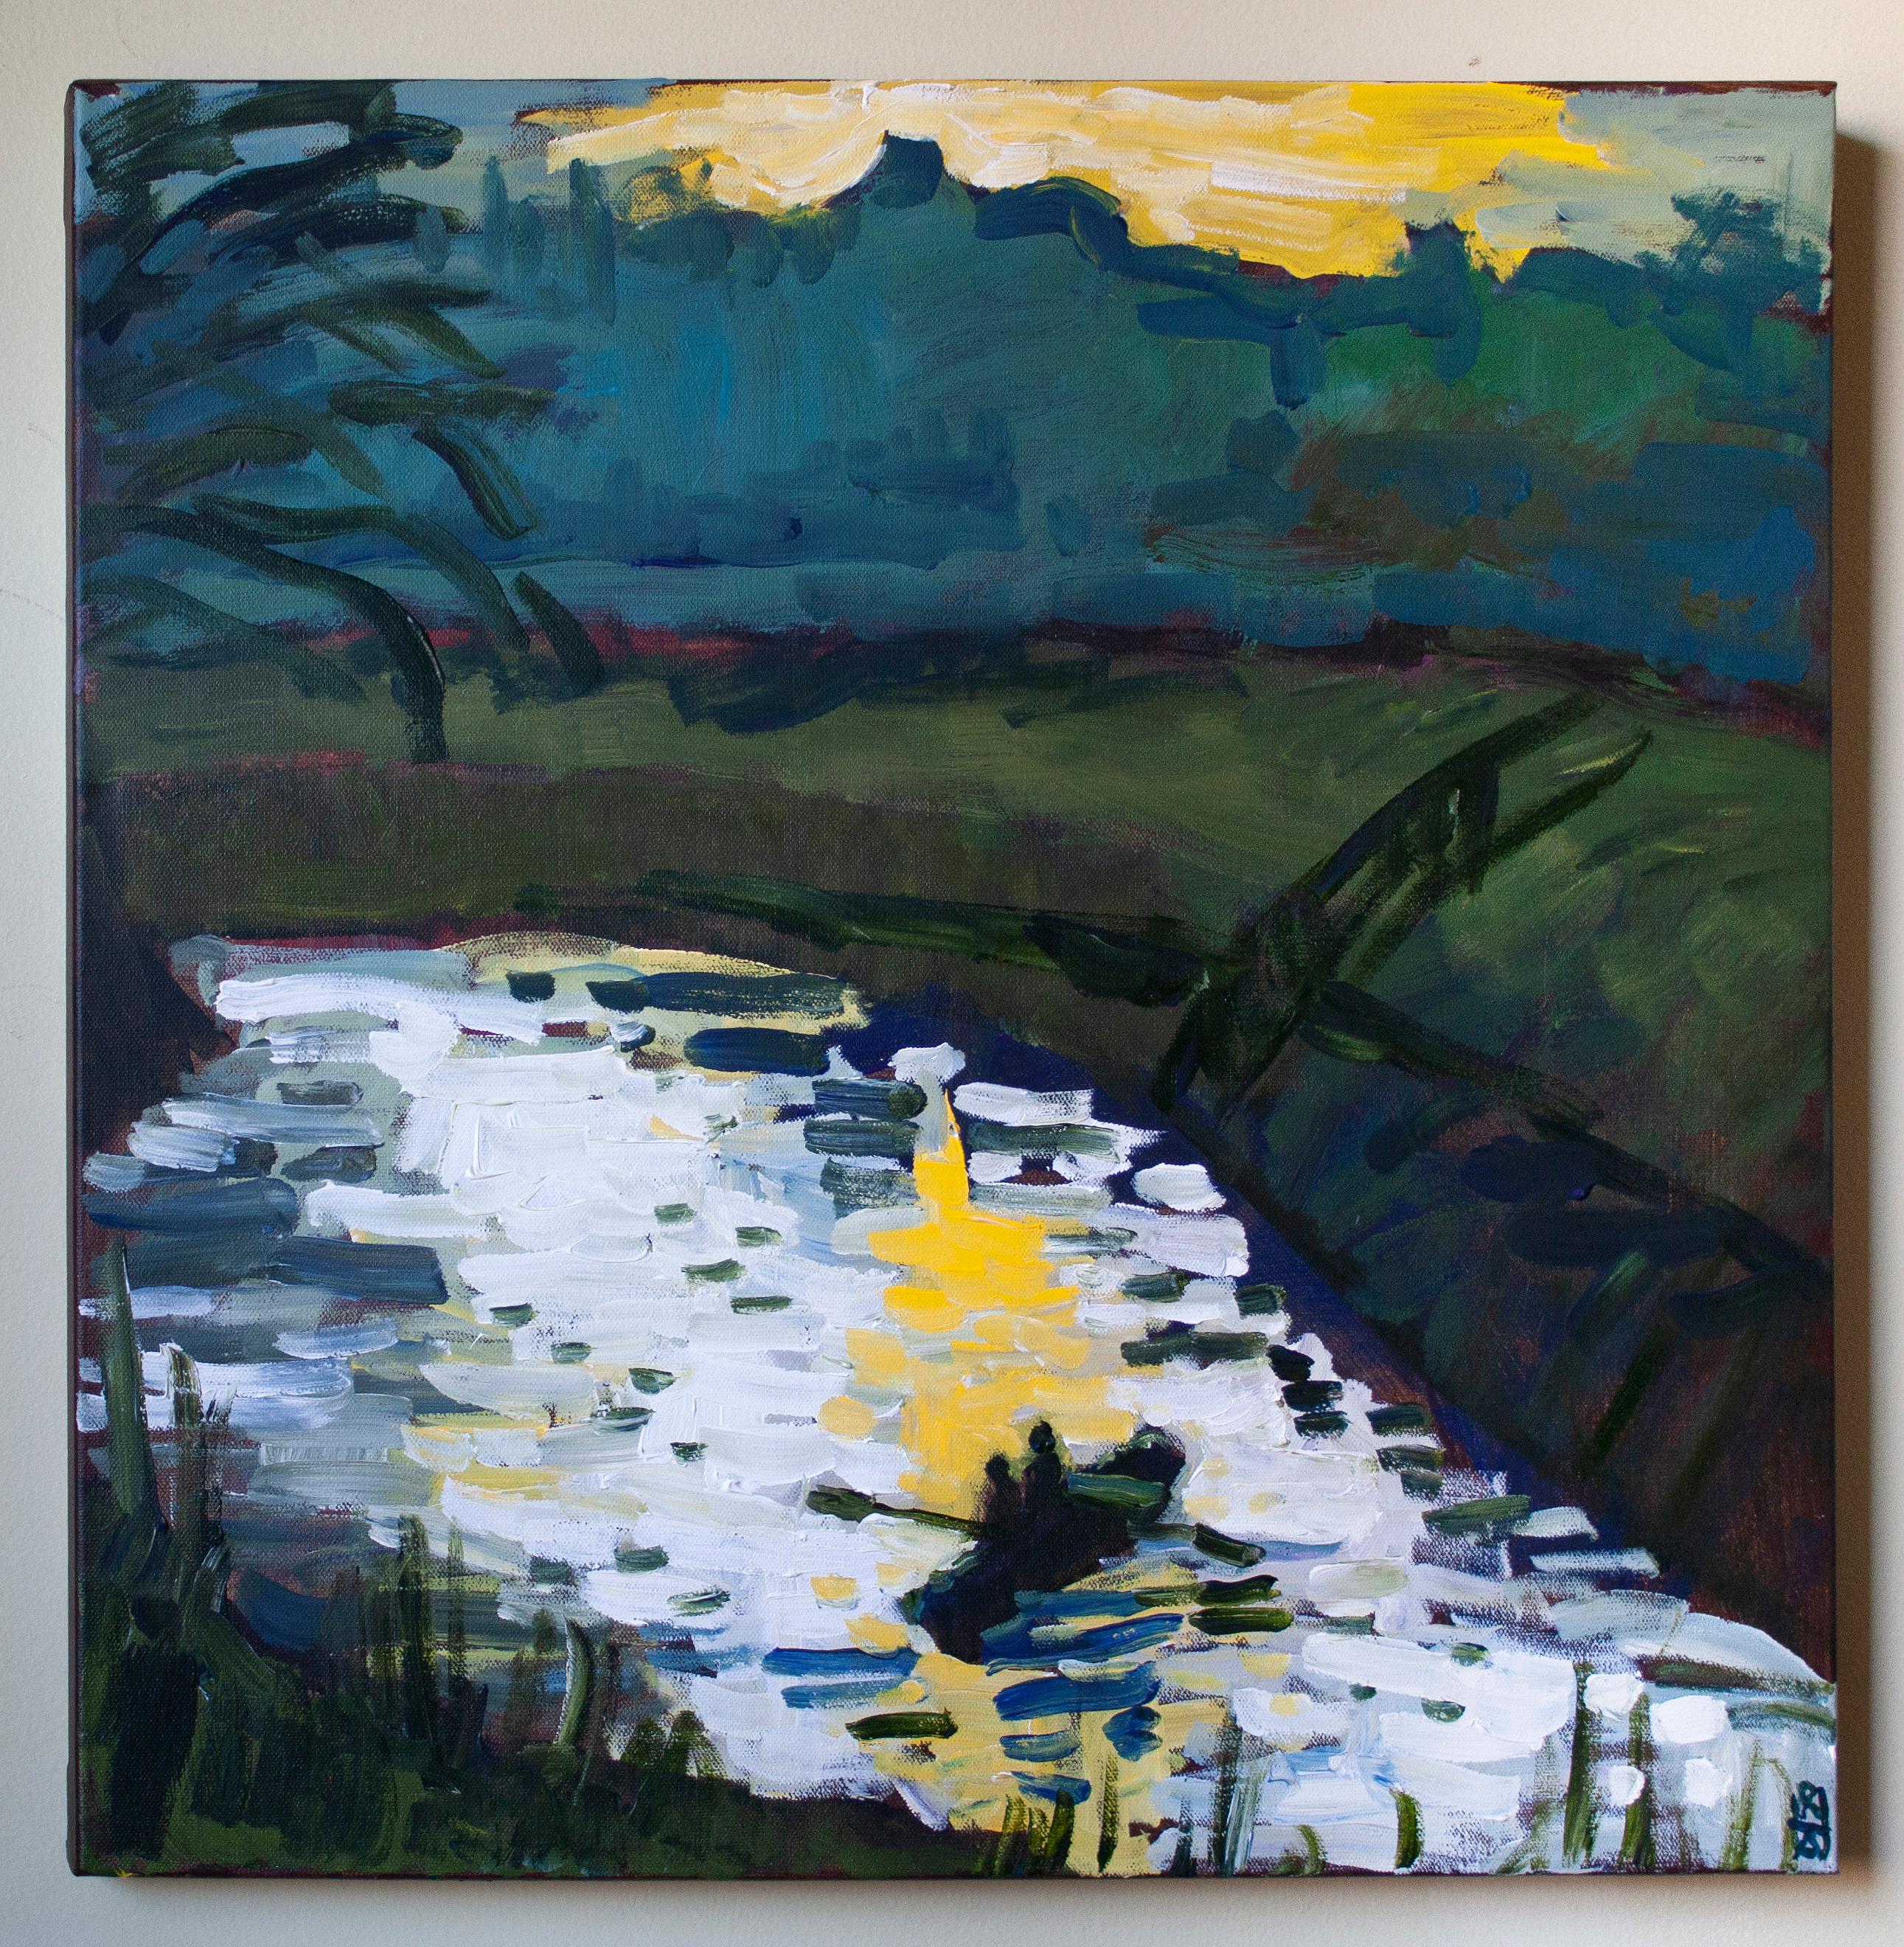 Boating on the Marsh, Original Painting - Black Landscape Painting by Robert Hofherr